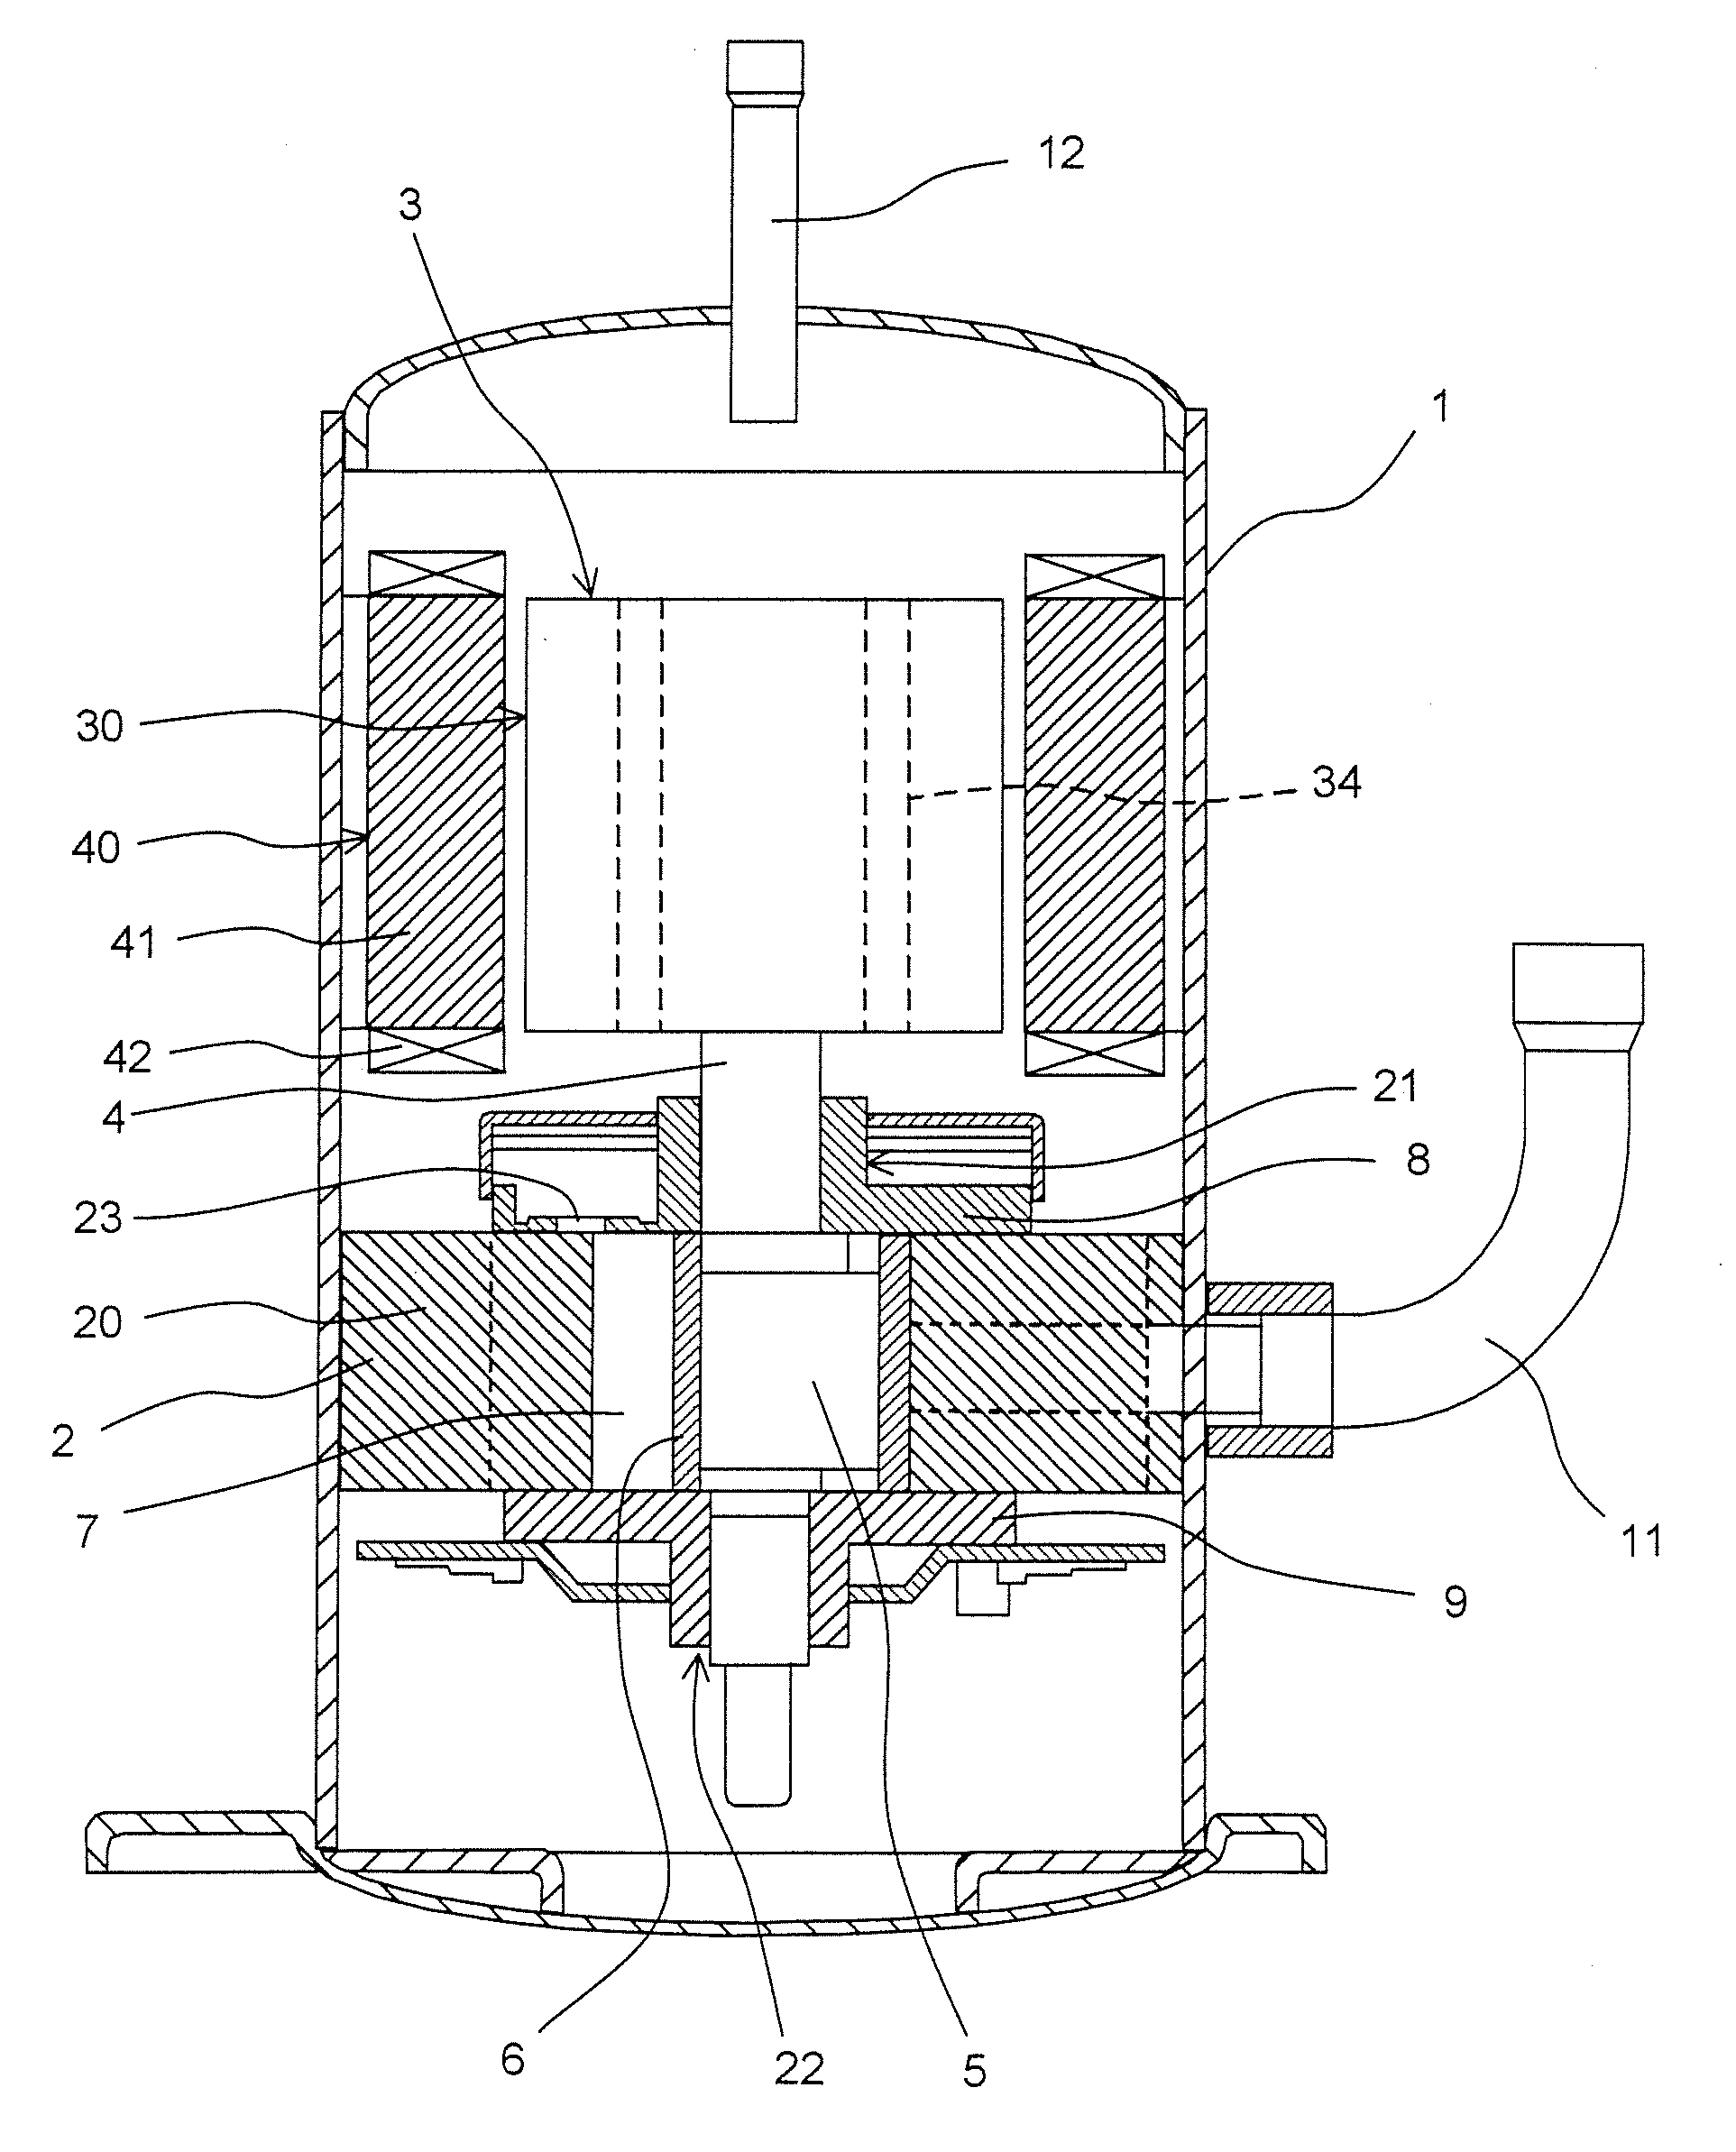 Motor and compressor